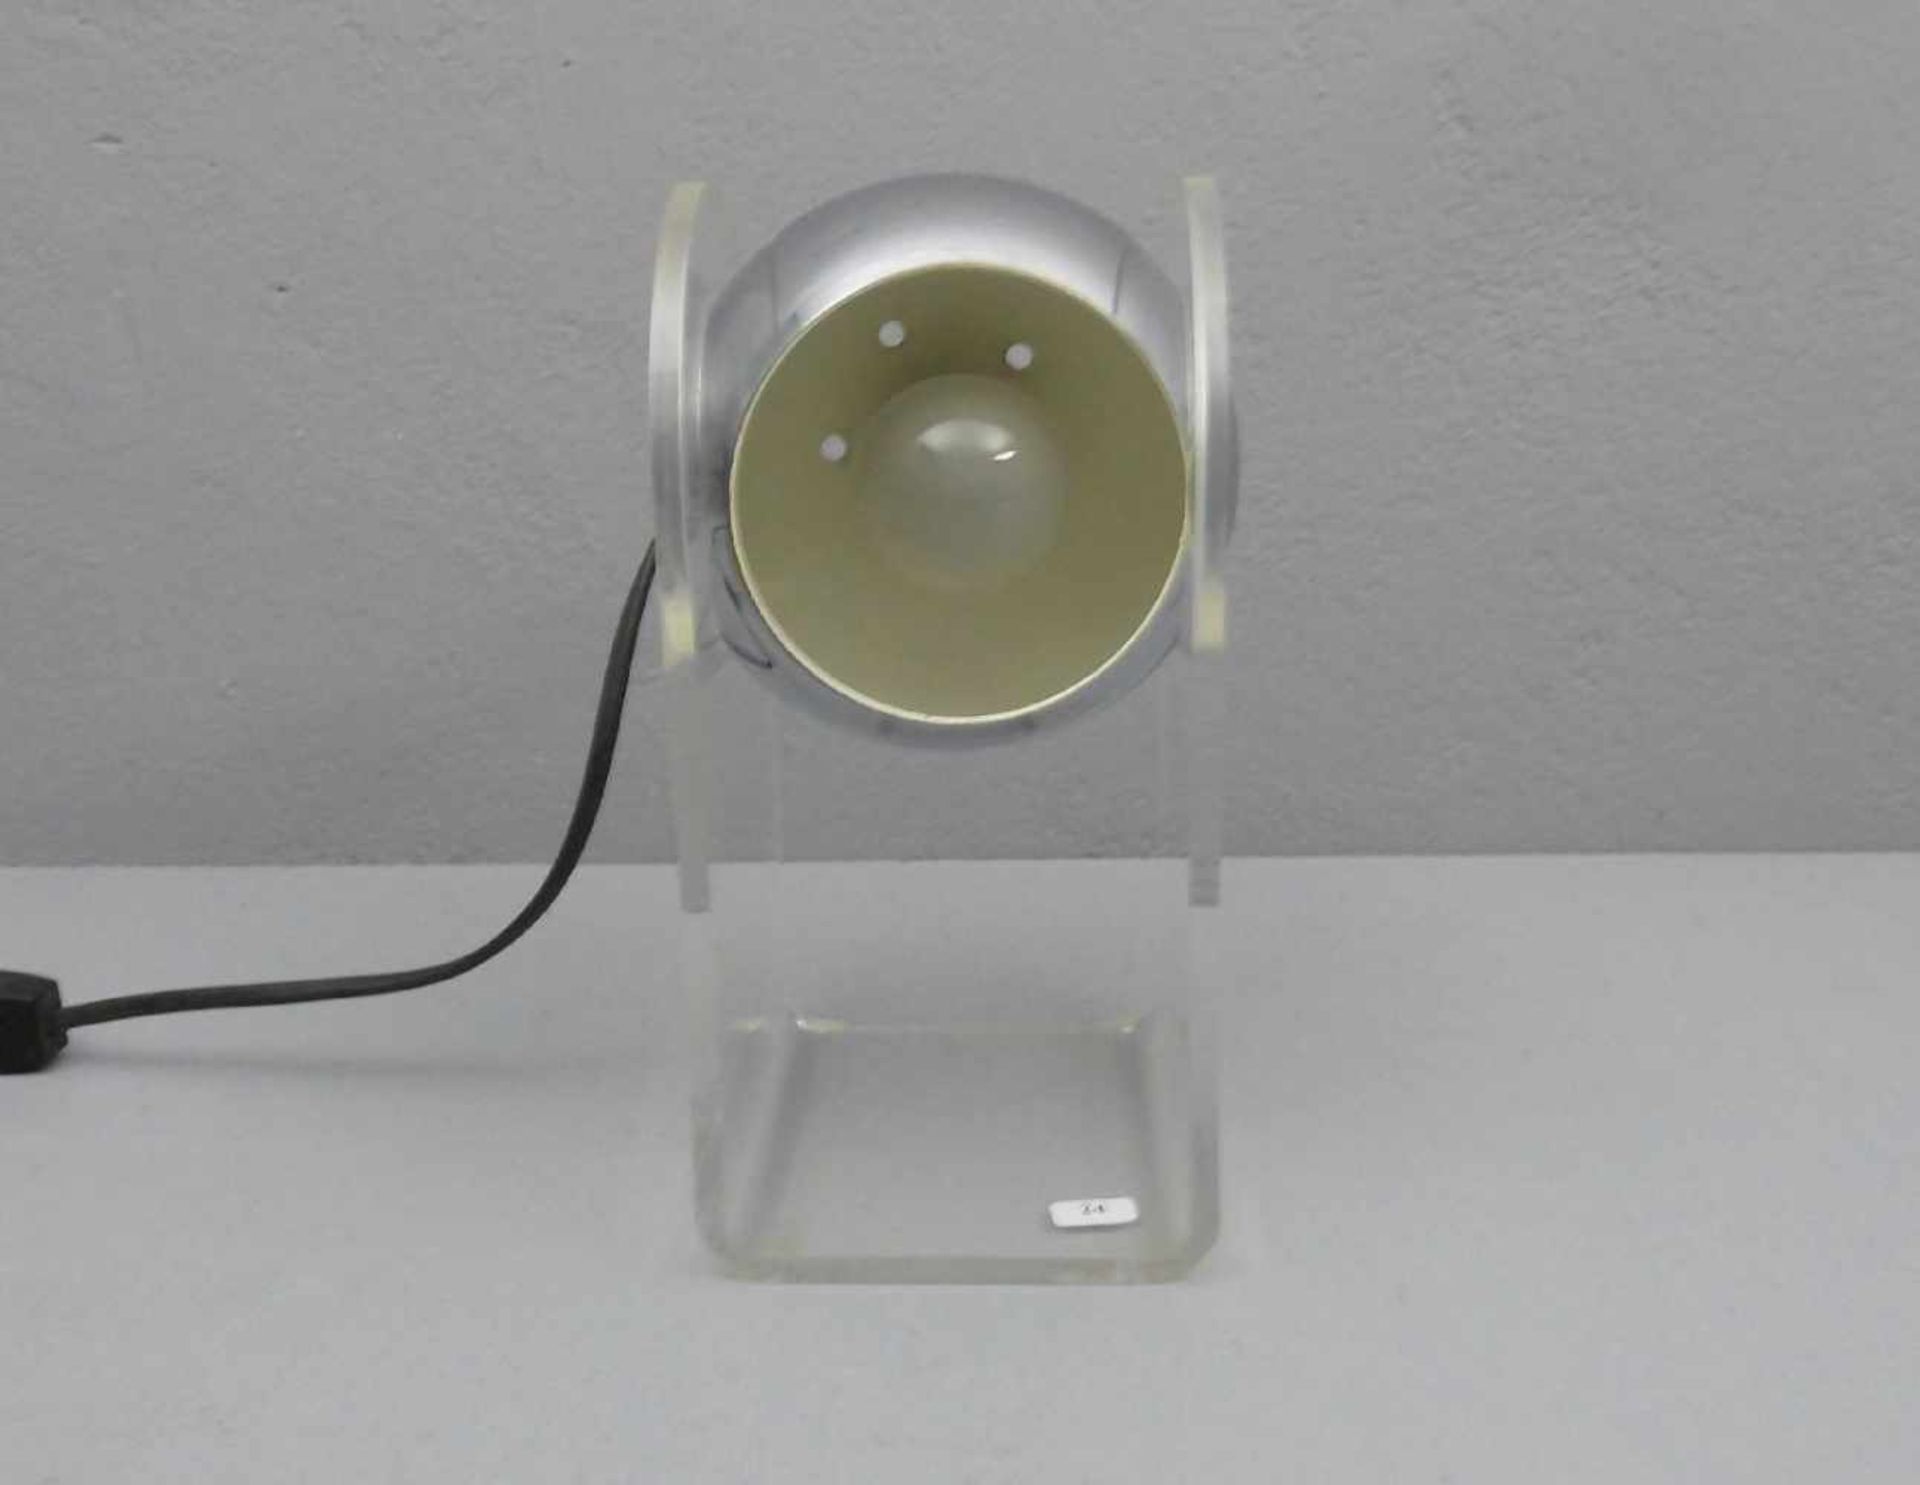 LAMPE / TISCHLAMPE, 1960er / 1970er Jahre, gebogter Acrylglasstand und verchromte kugelförmige